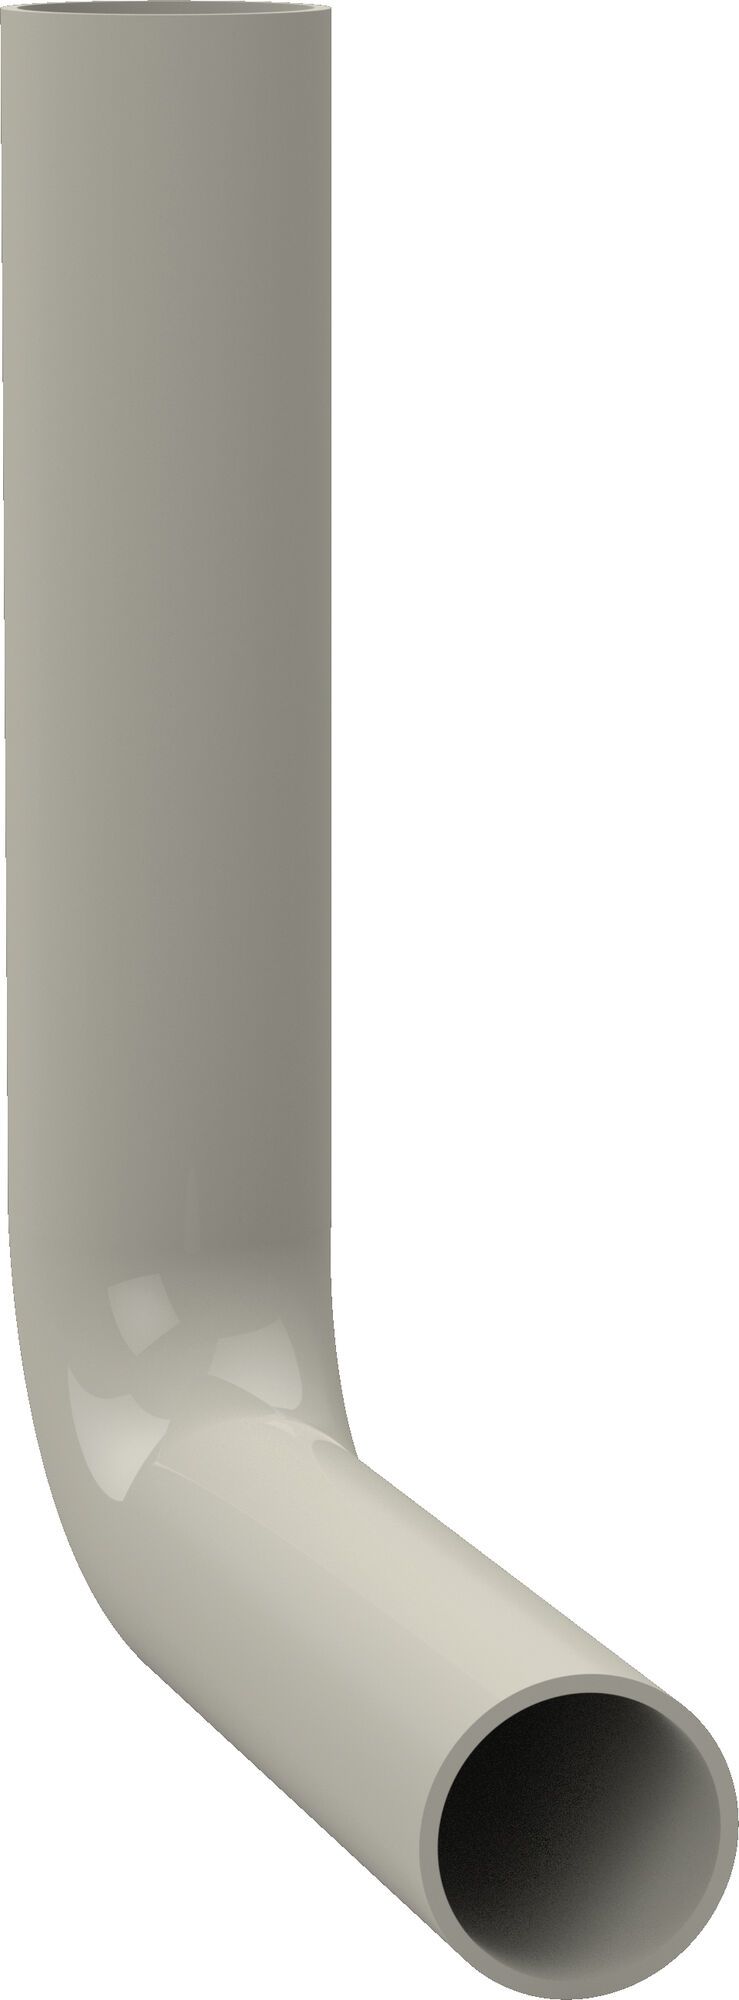 Valpijpbocht 230x210 mm, pergamon (verpakt)